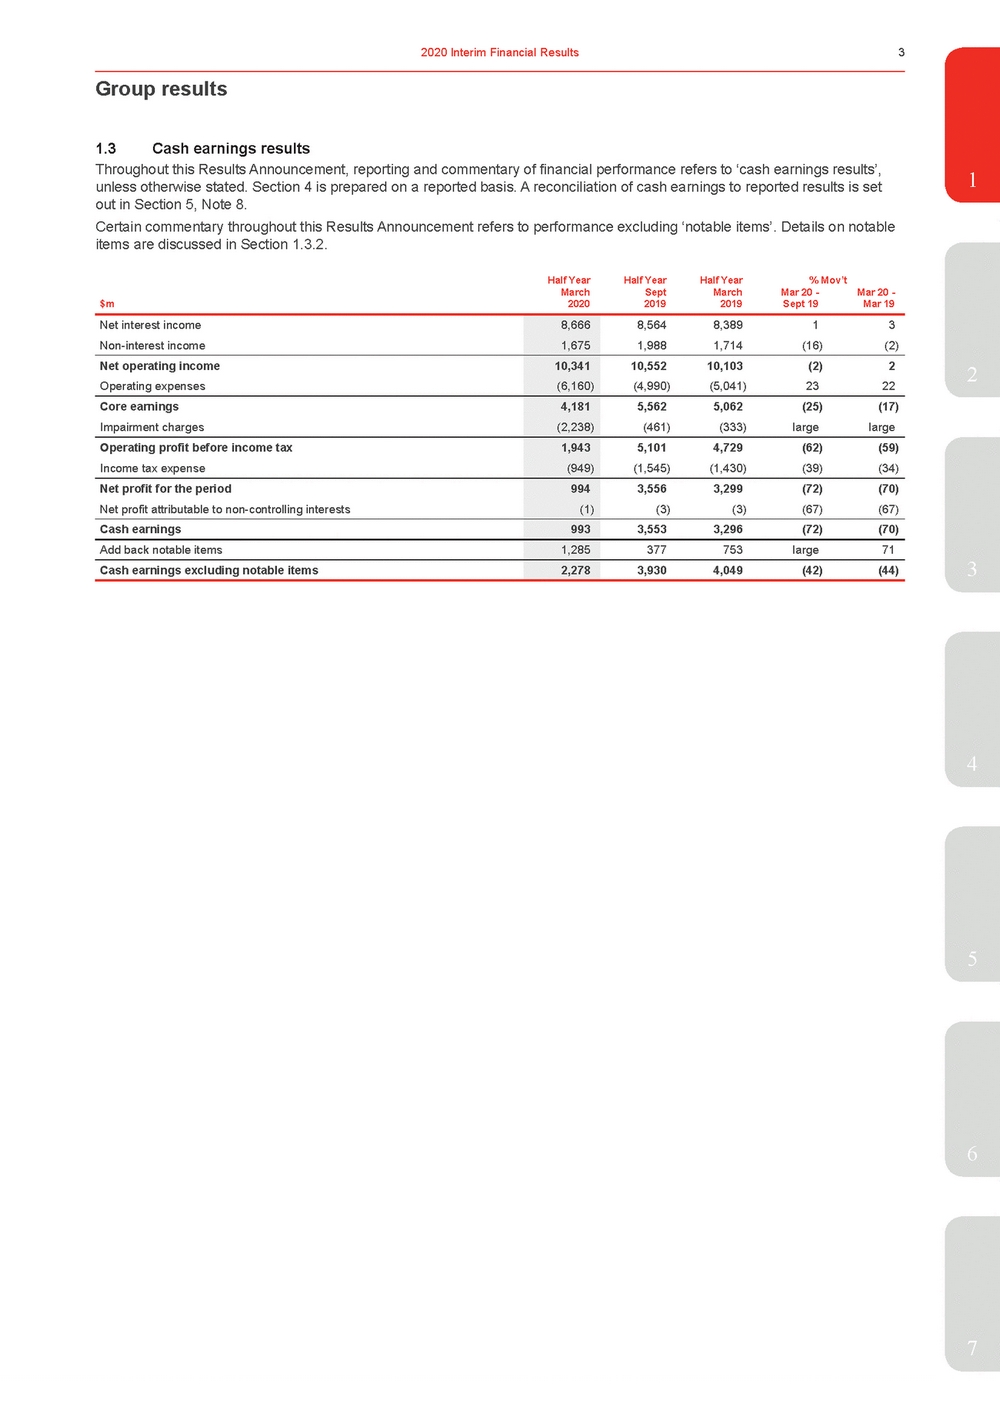 11676-3-ex1_westpac 2020 interim financial results announcement_page_008.jpg